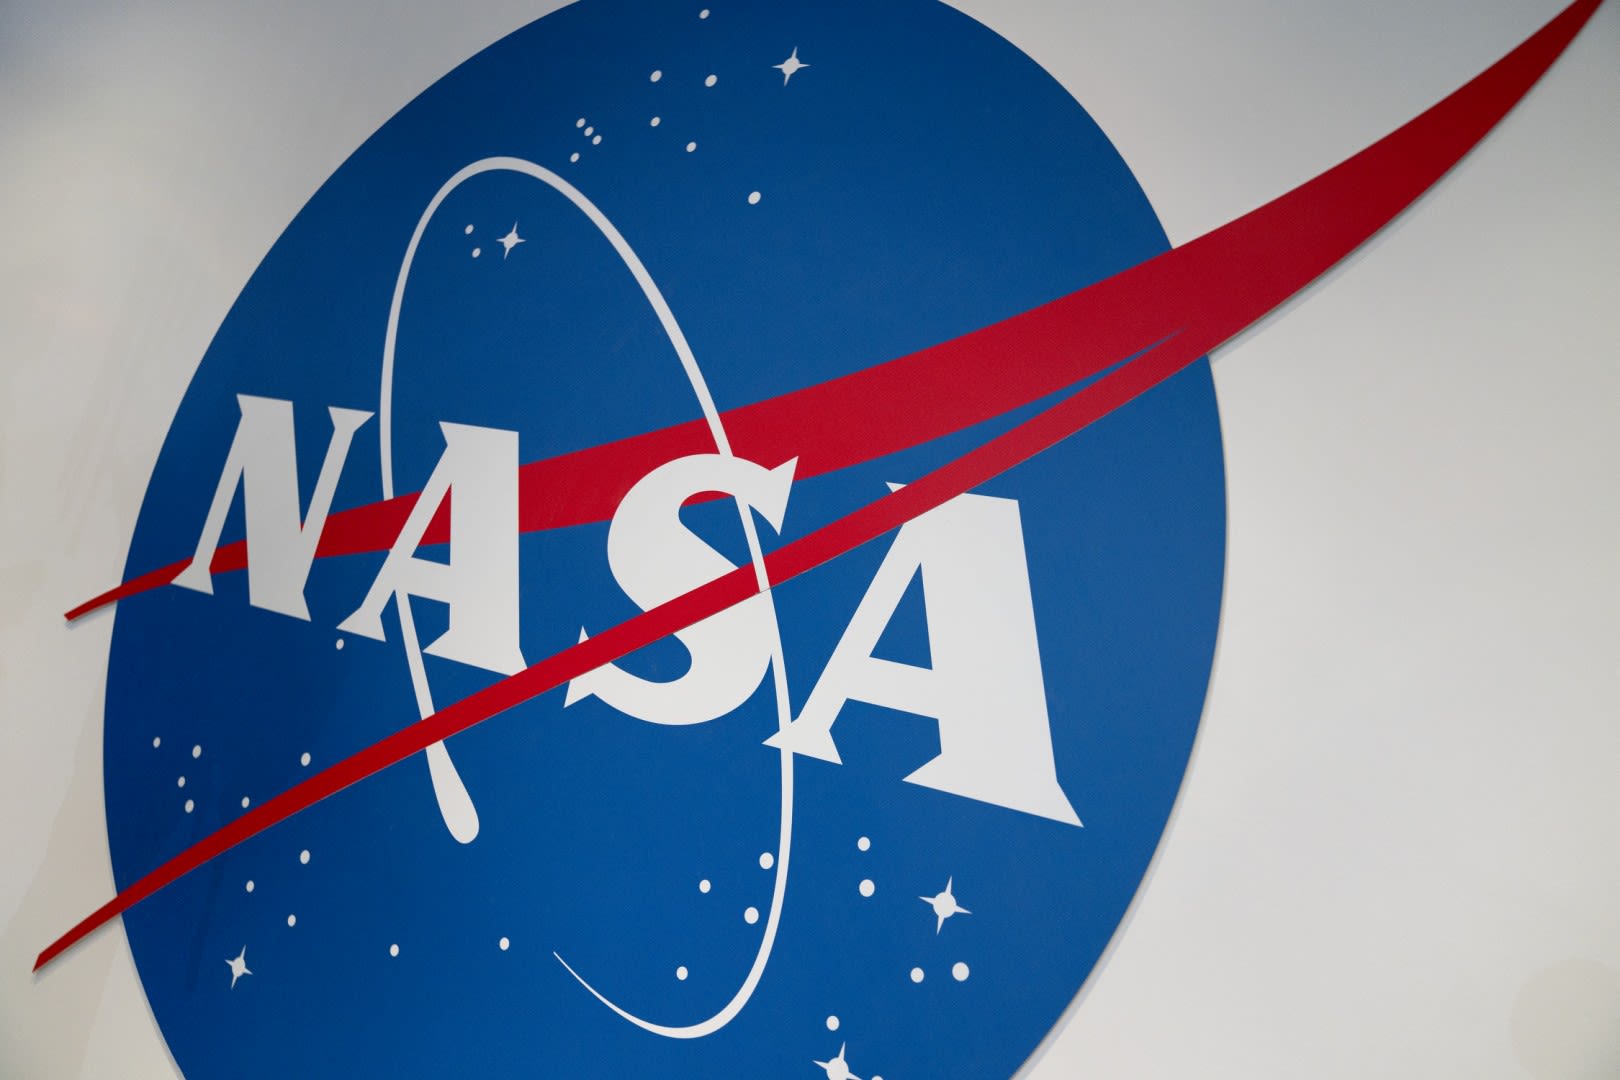 Posts linking Disney, former Nazi to NASA founding are misleading